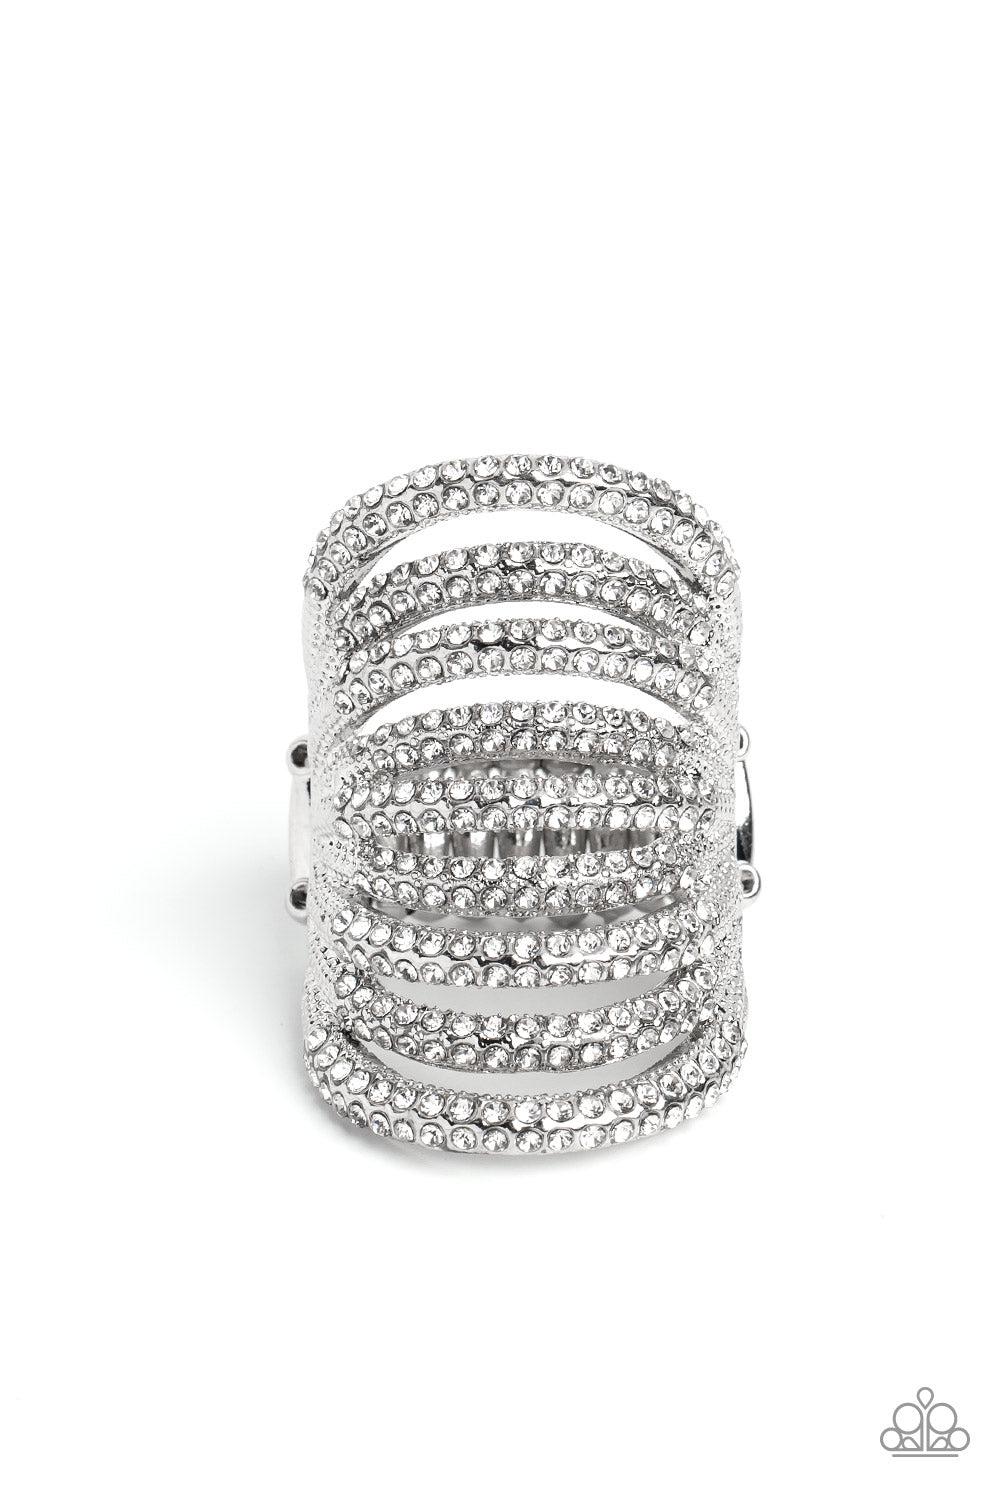 Rippling Rarity White Rhinestone Ring - Paparazzi Accessories- lightbox - CarasShop.com - $5 Jewelry by Cara Jewels